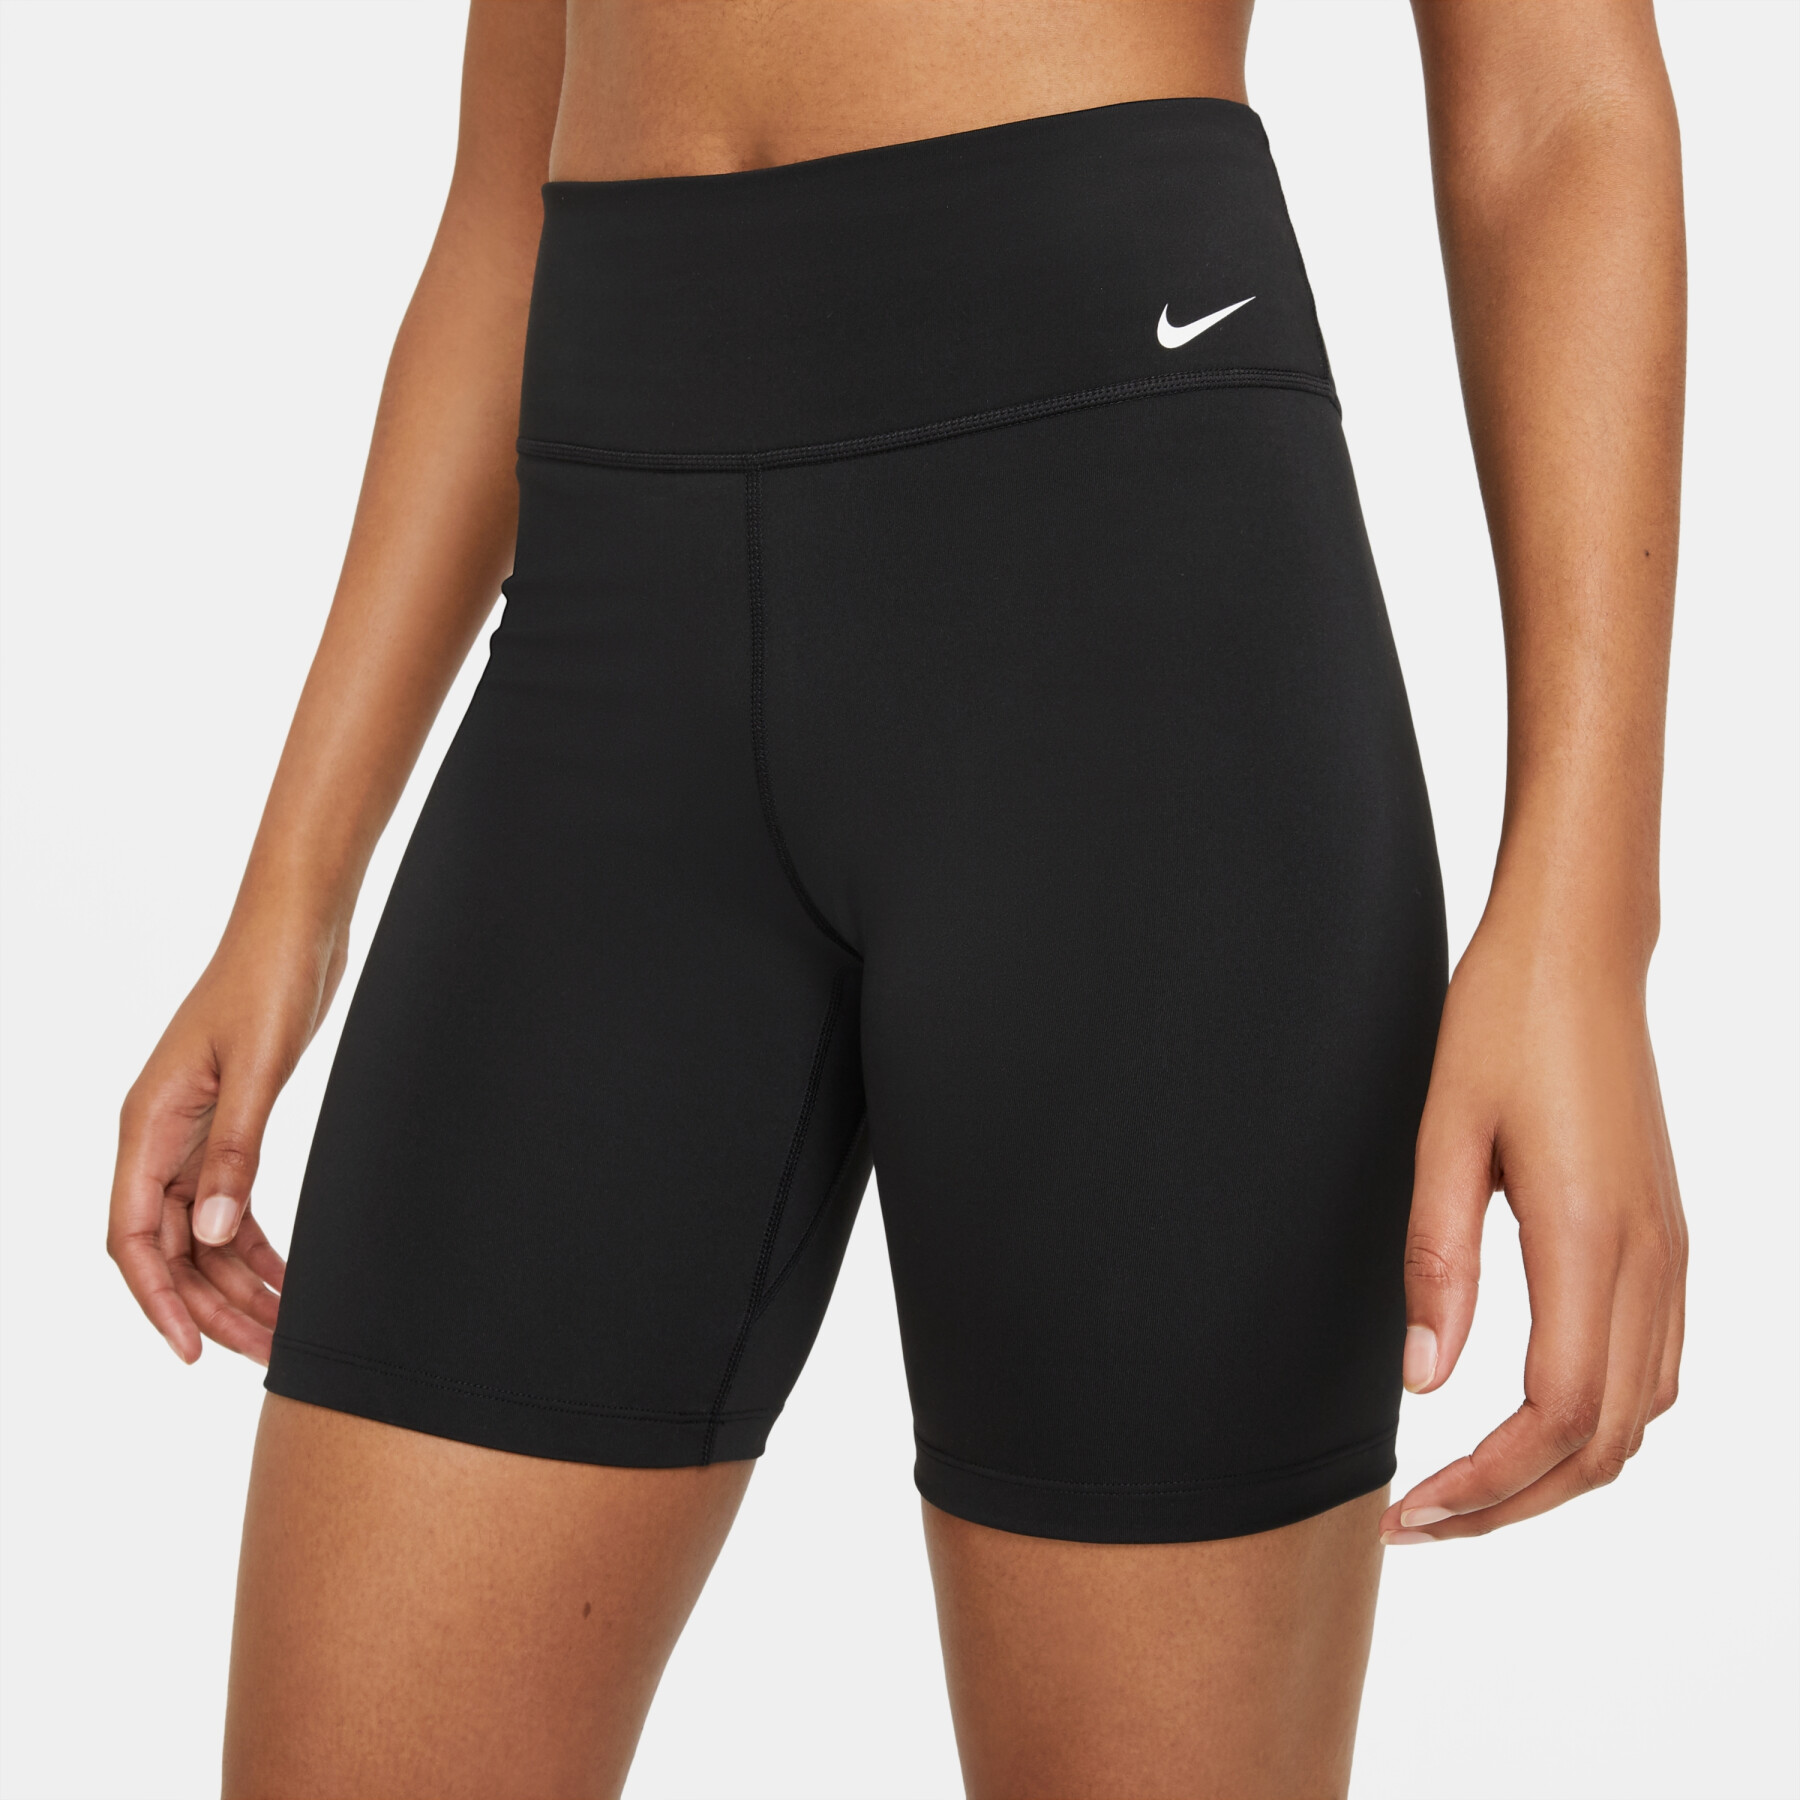 Women's shorts Nike one mid-rise 7"